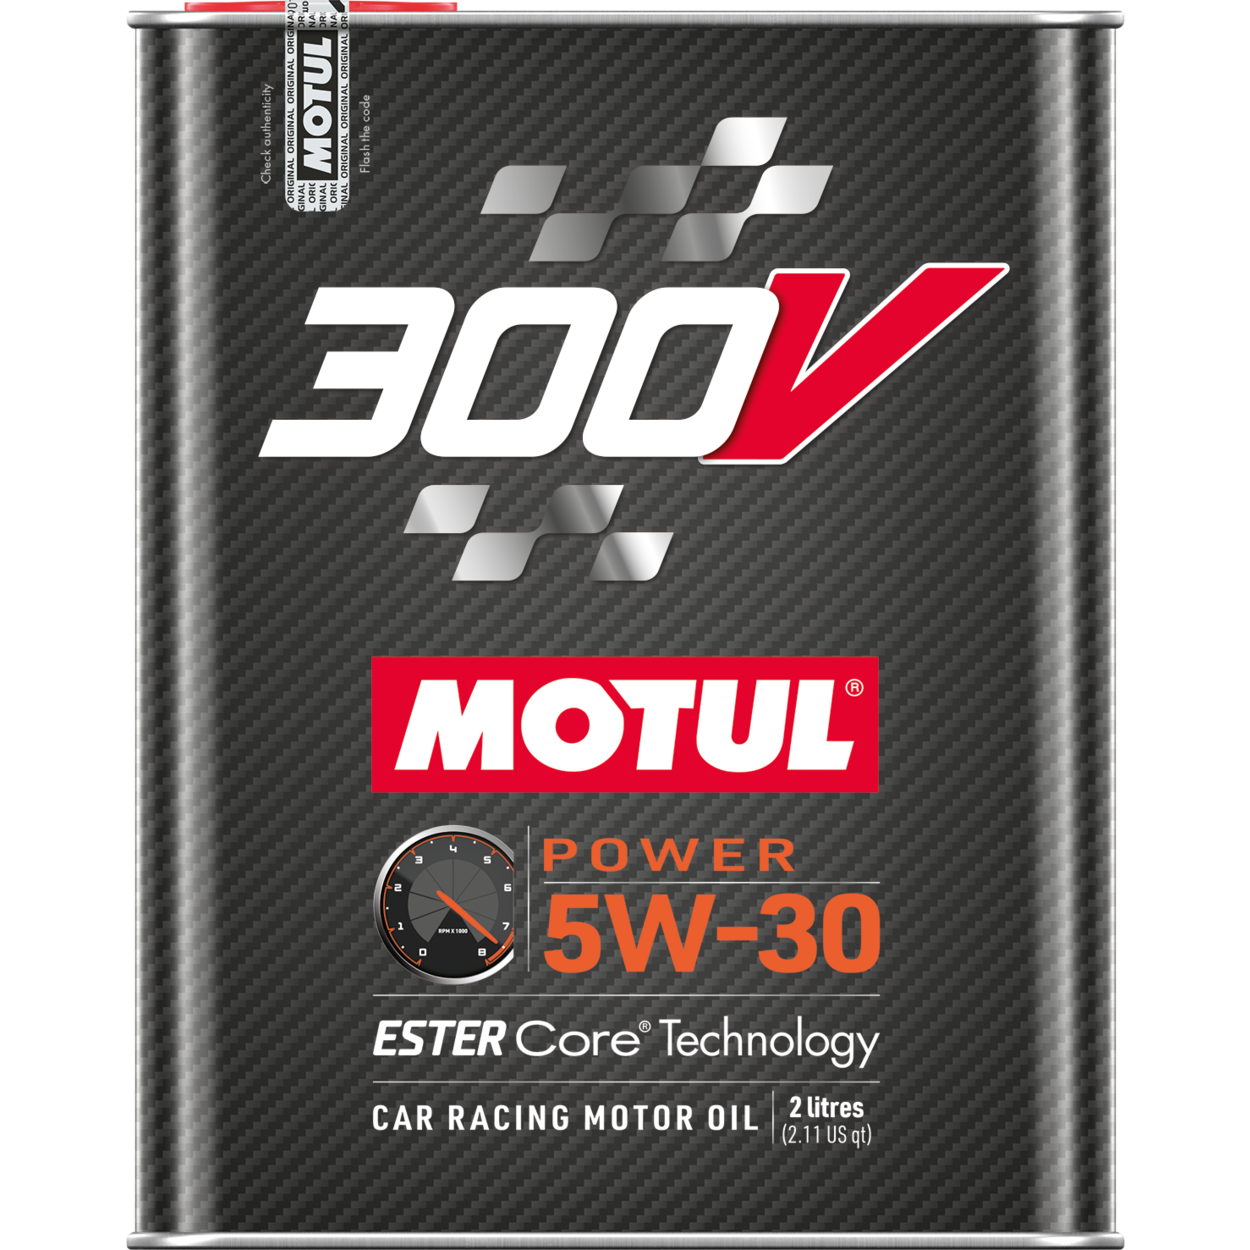 Aceite MOTUL 300V Power Racing 5W30 2L